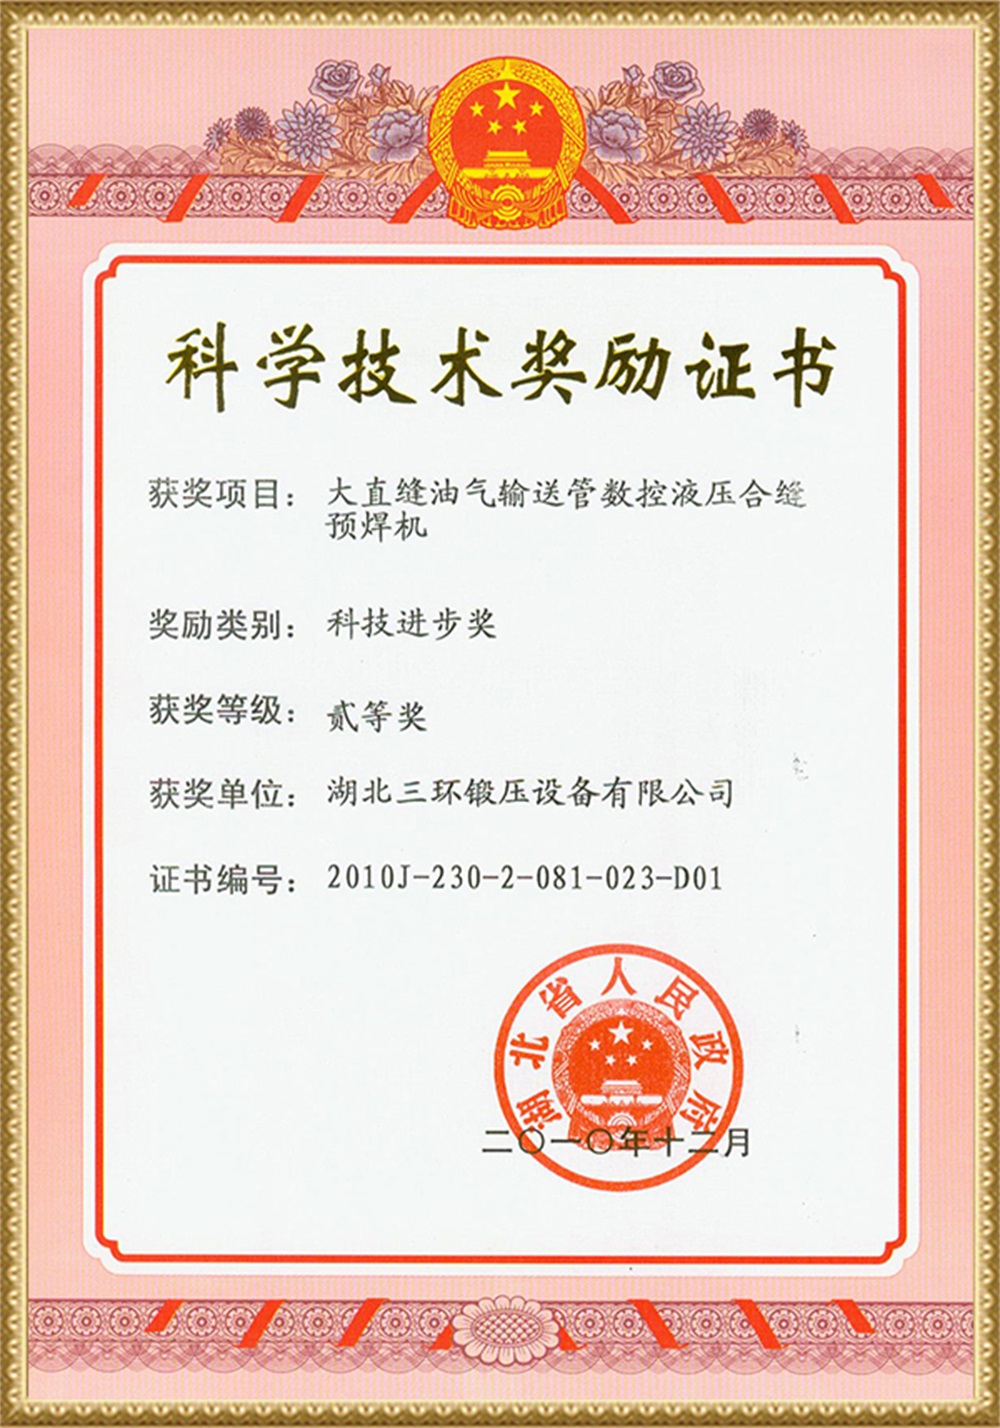 2010 Second Prize of Hubei CNC Welding Machine